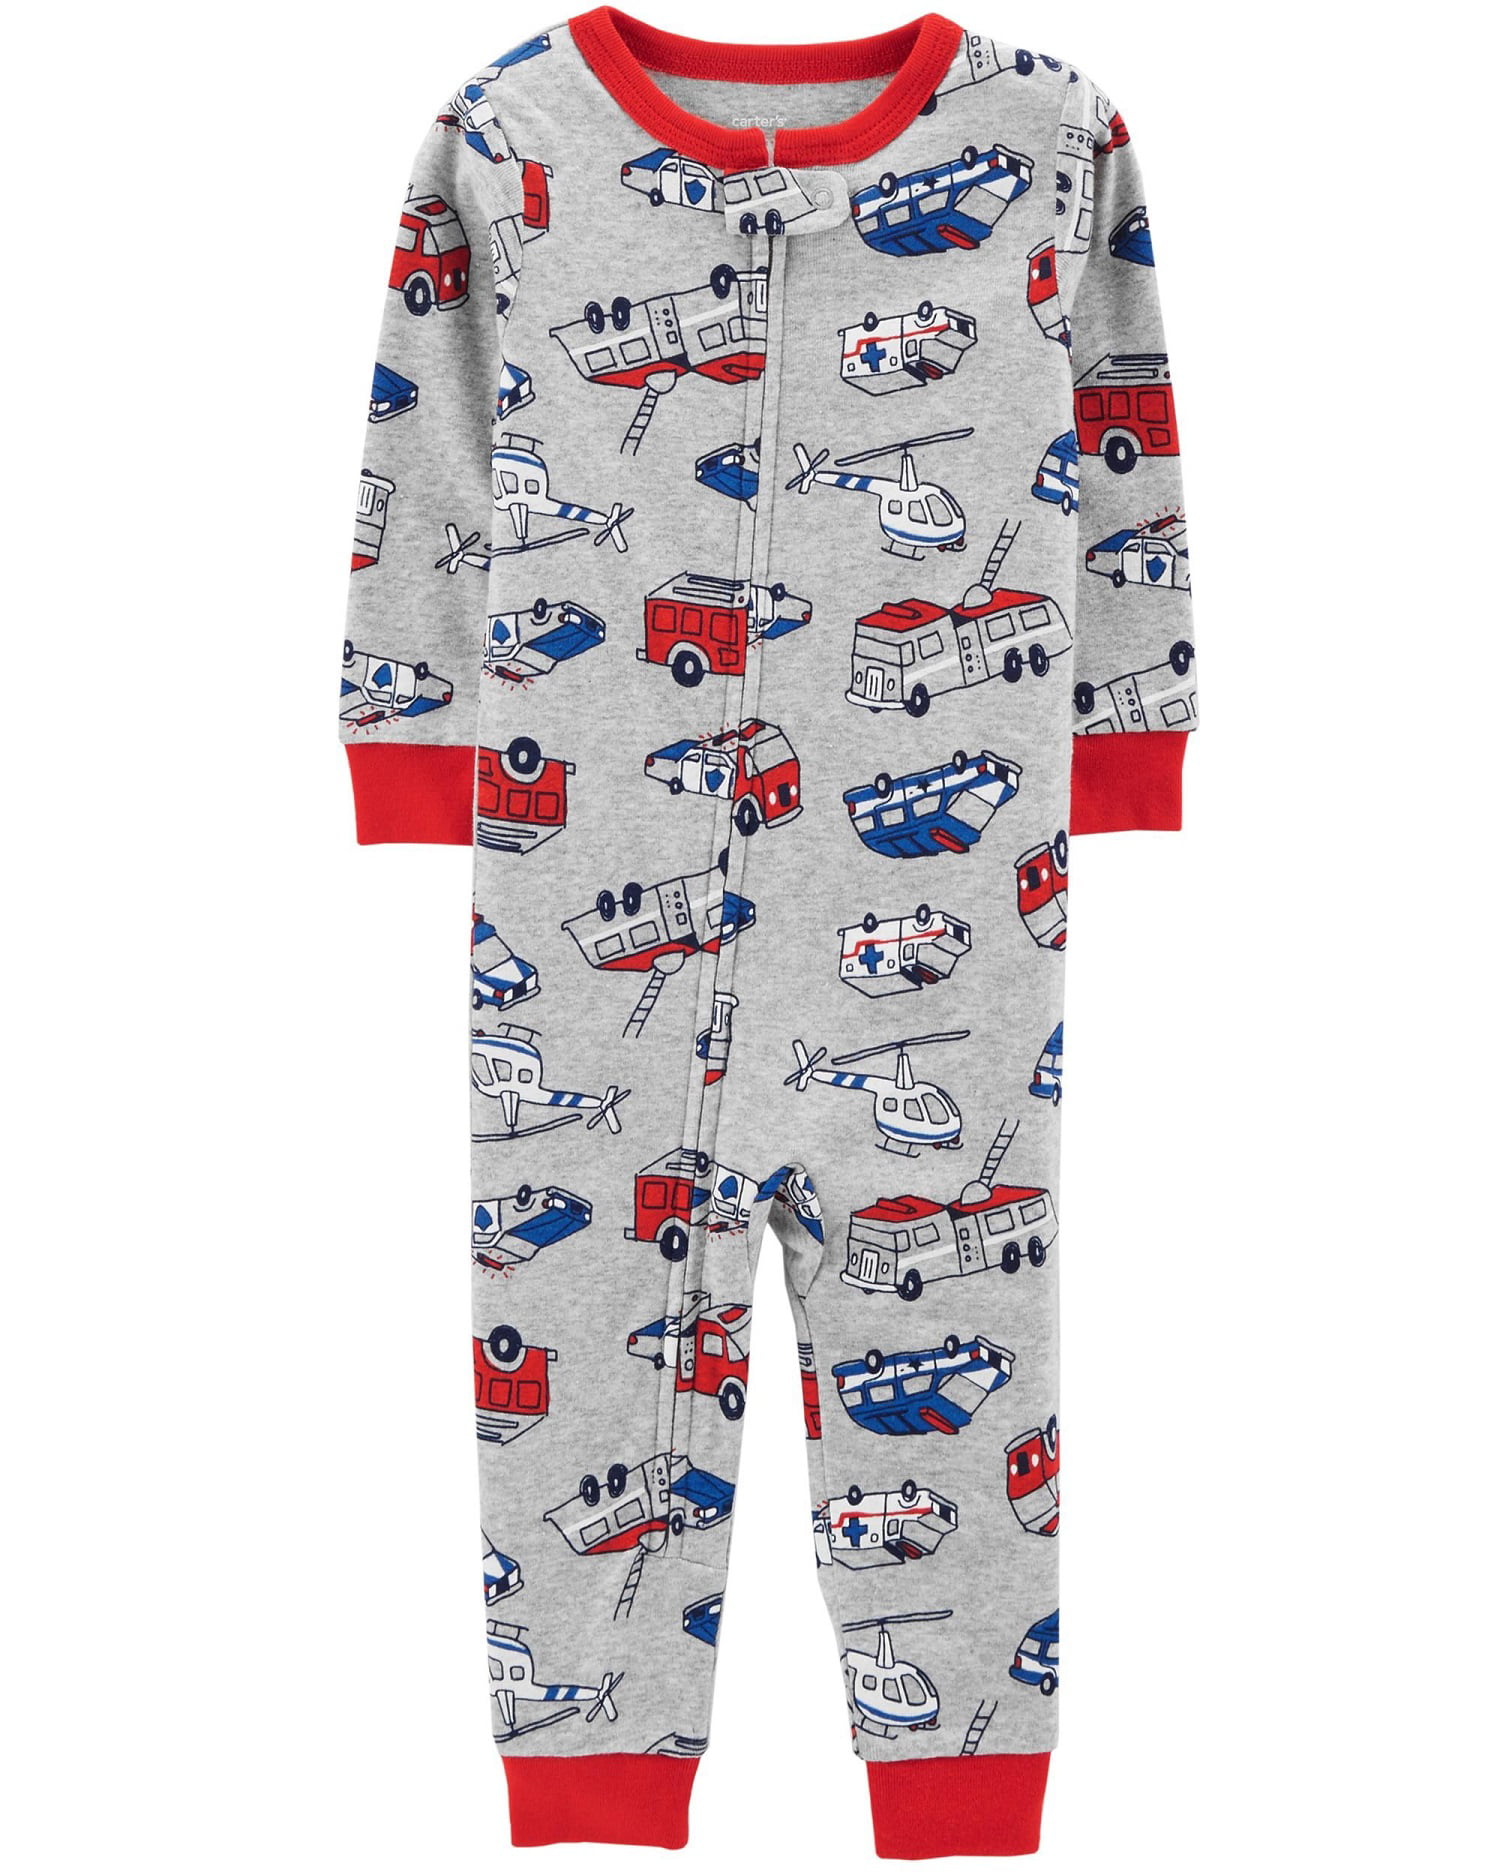 Carters Baby Boys 1-Piece Shark Snug Fit Cotton Footless Pajamas